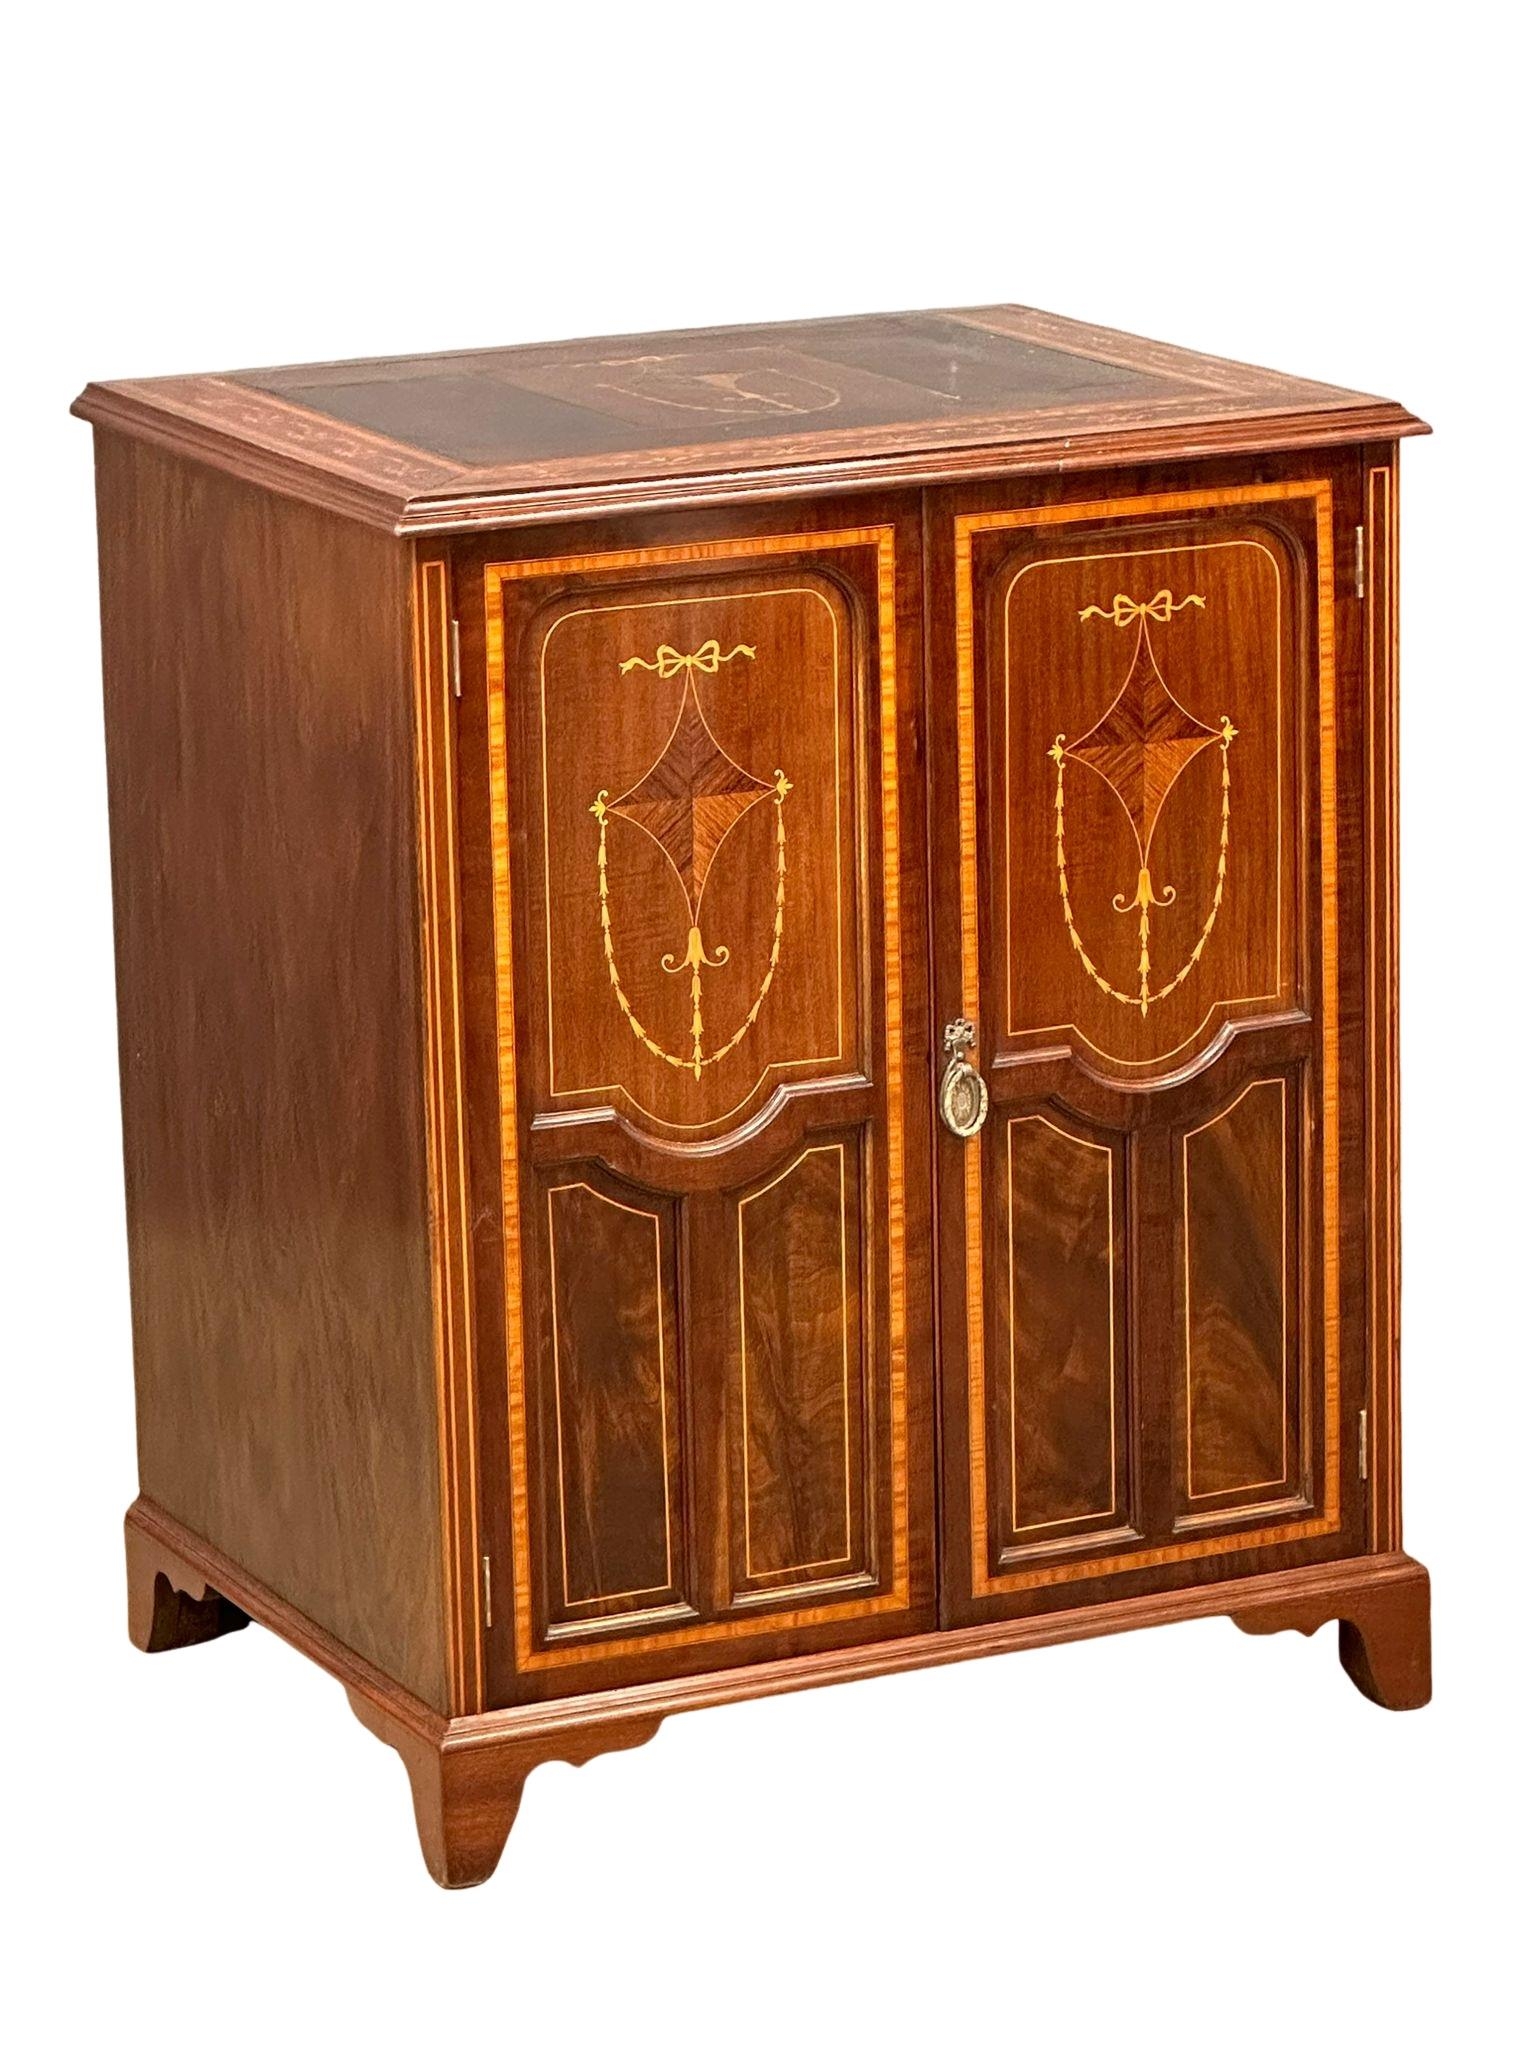 A late 19th century Sheraton Revival inlaid mahogany linen cupboard/ side cabinet. Circa 1890-